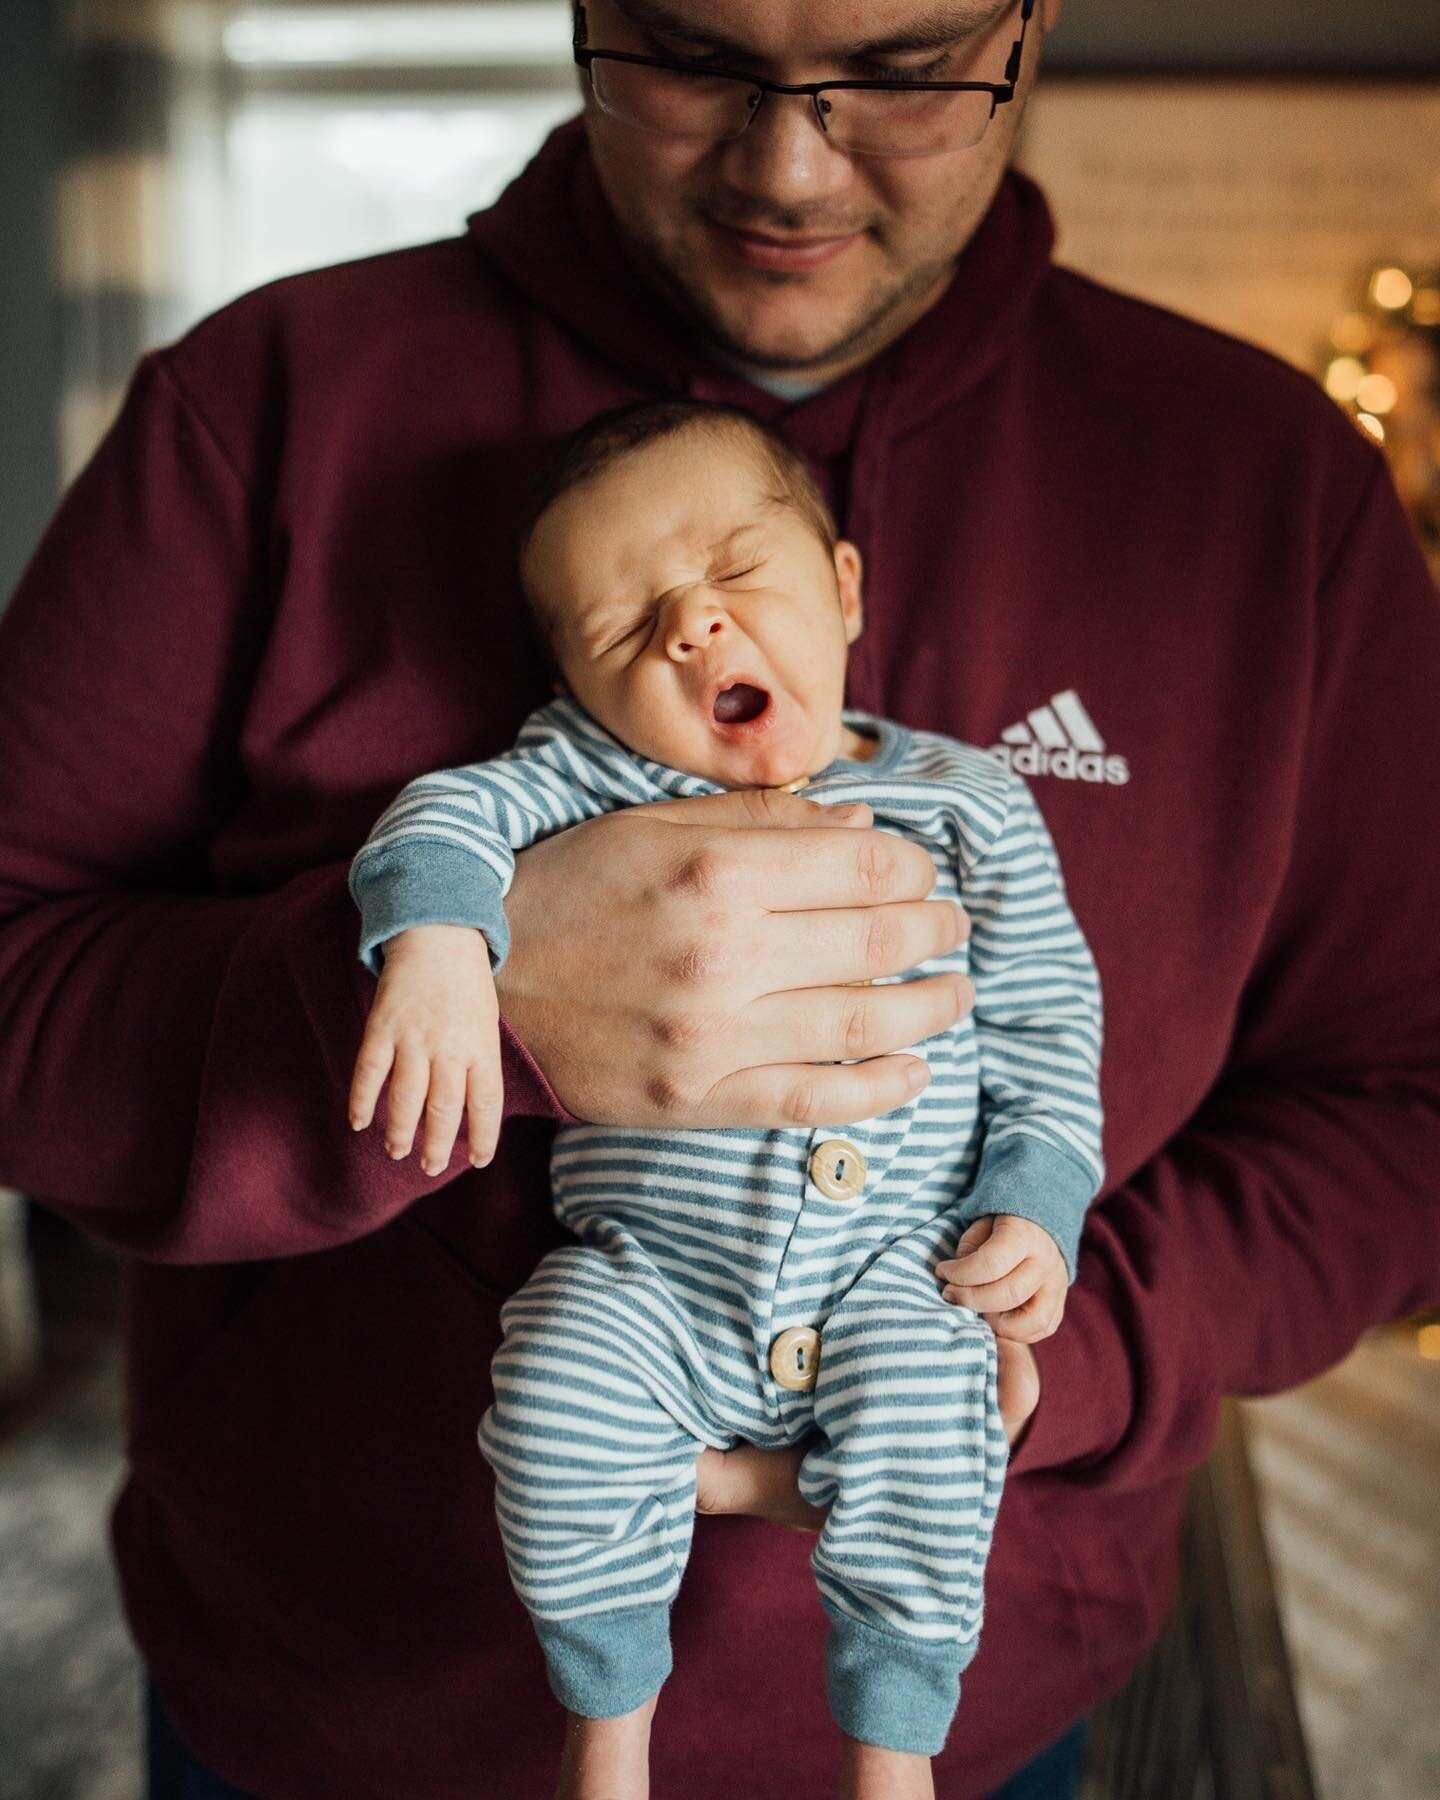 As promised, here's more of sweet baby Cruz.  The baby yawns always get me. 😍